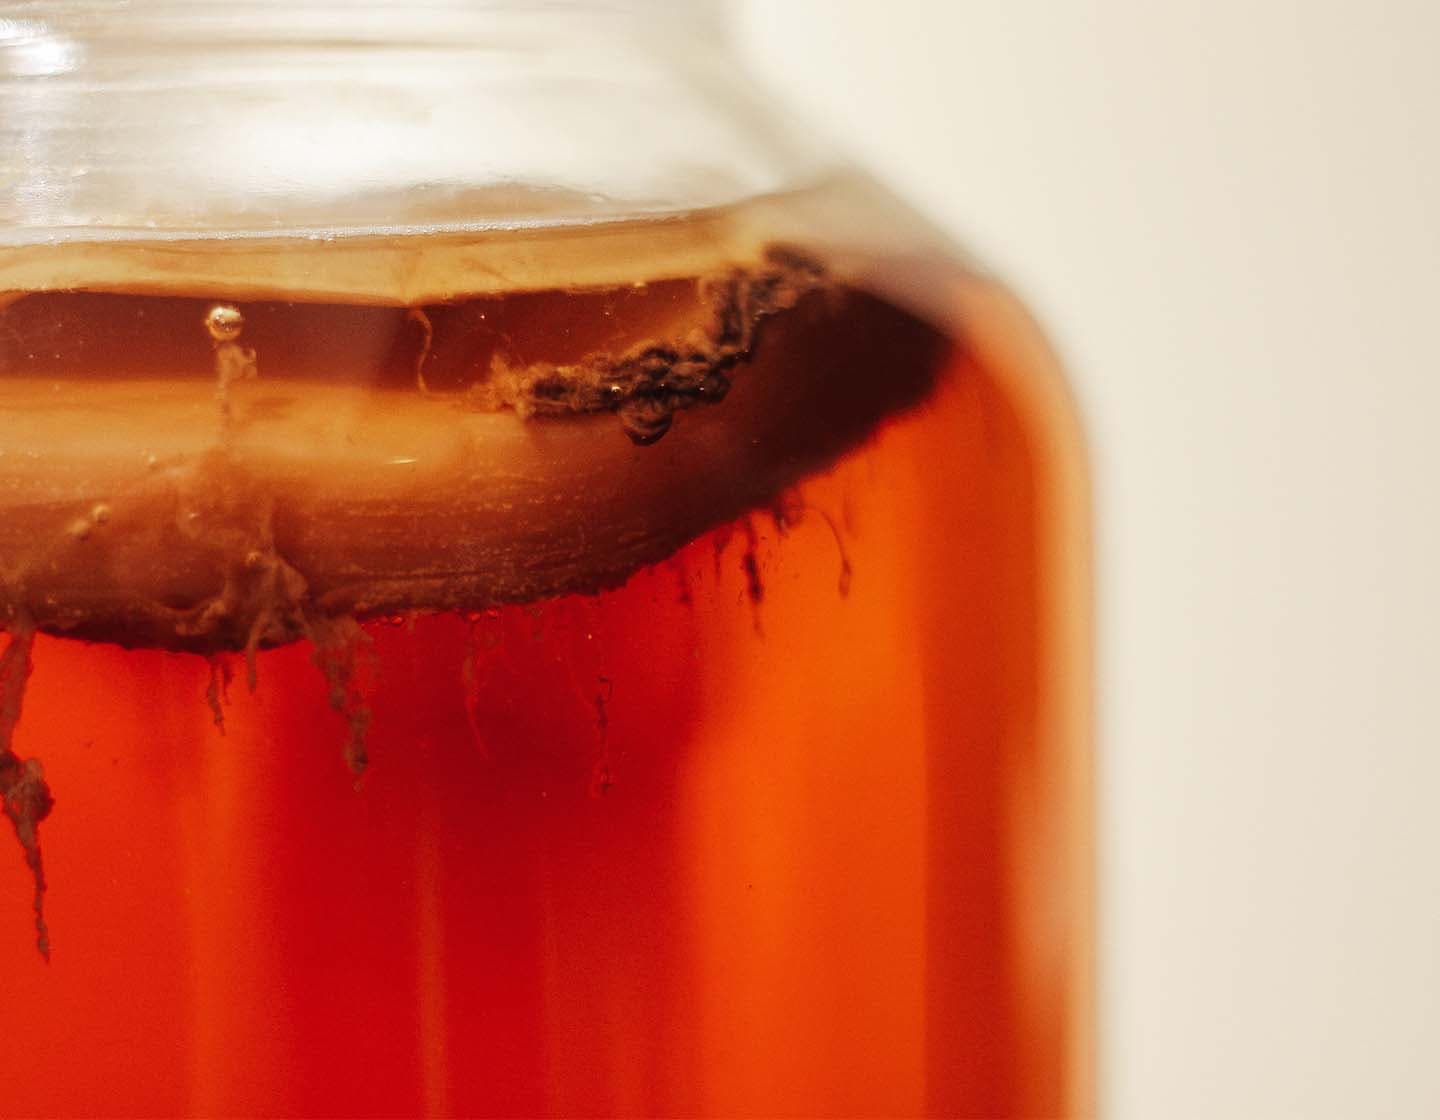 Close up shot of fermenting liquid in a jar